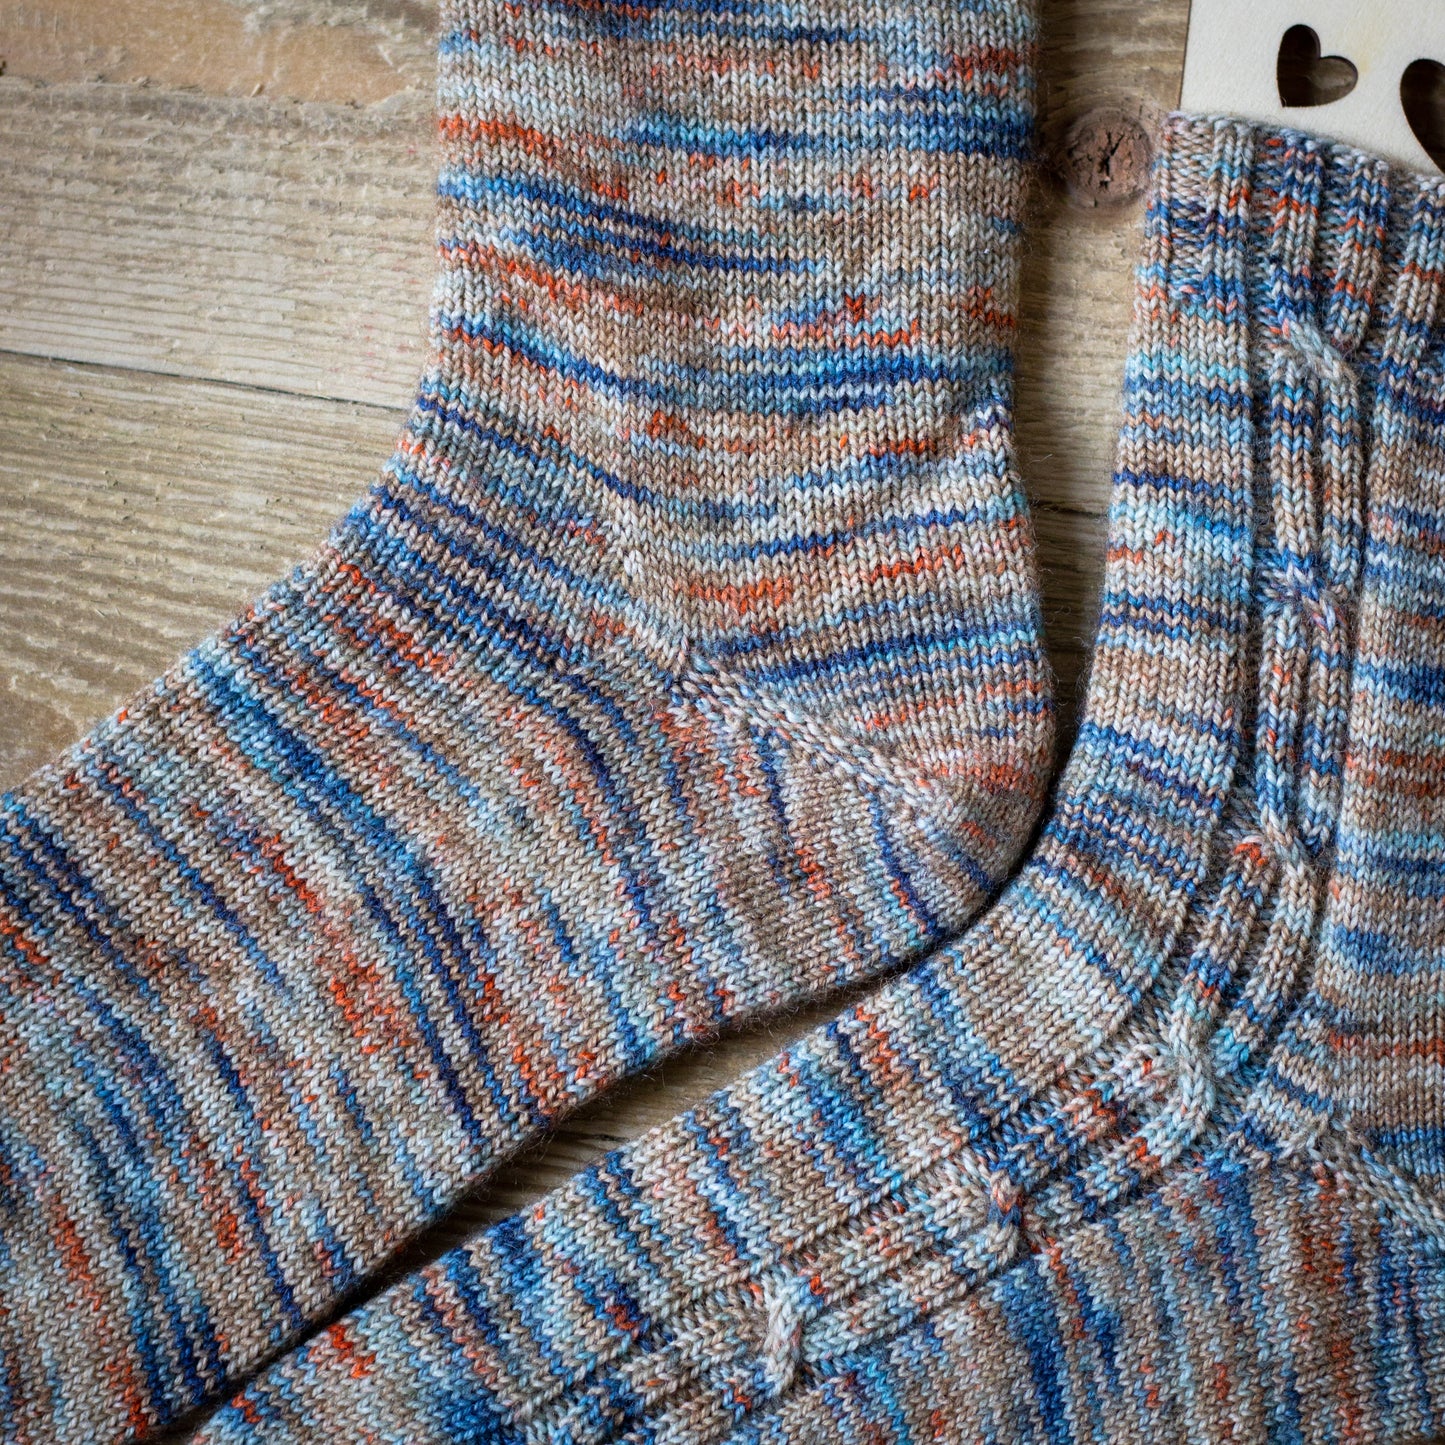 "Sea shore breeze" - hand dyed yarn